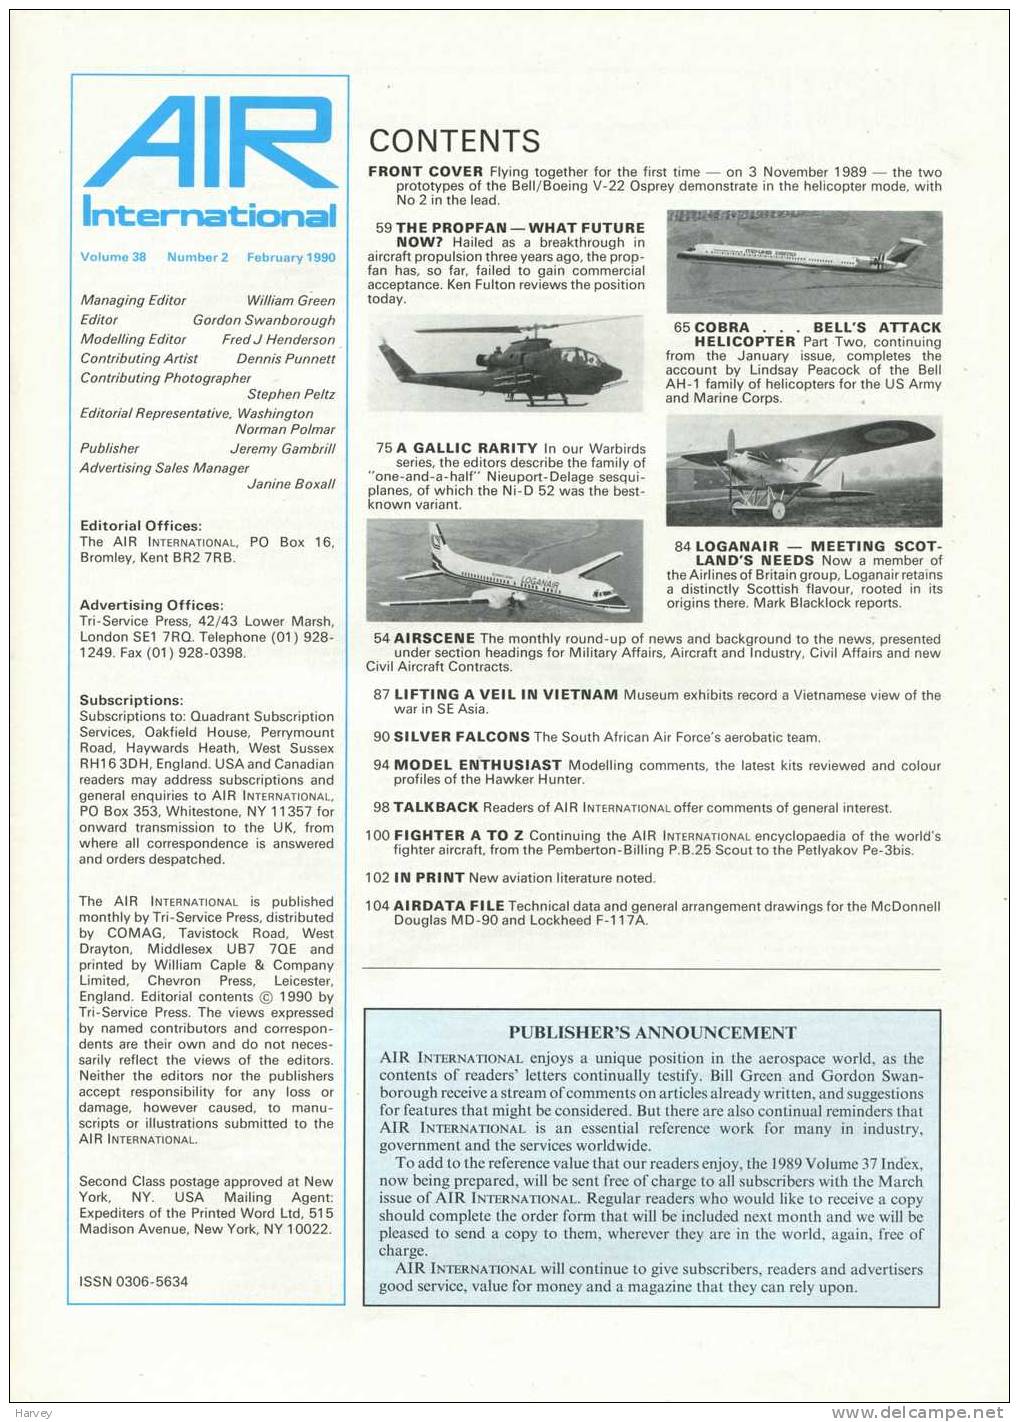 Air International Vol 38 N° 2 February 1990 - Transports